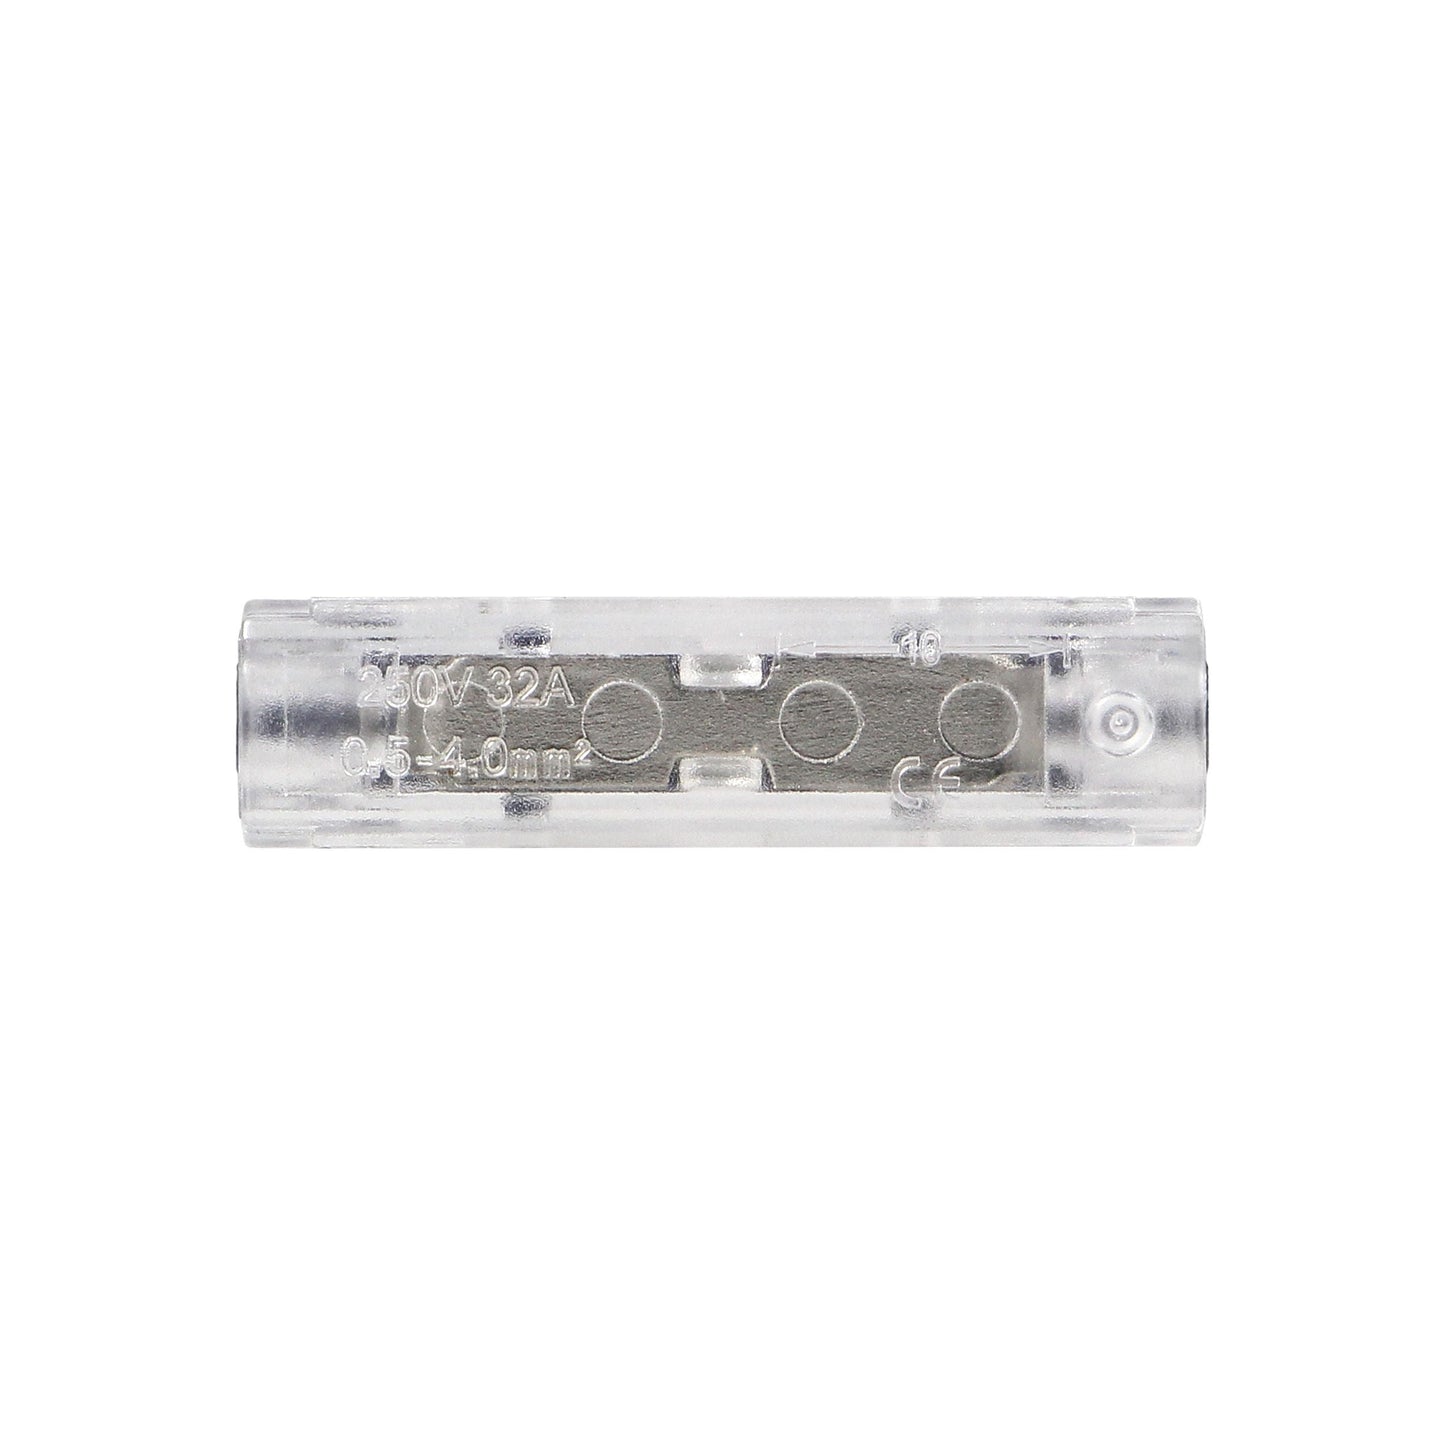 1-Draht-Klemmverbinder, doppelseitig; für beliebige 0,75-4mm²-Drähte; IEC 250V/32A; 100 Stück.